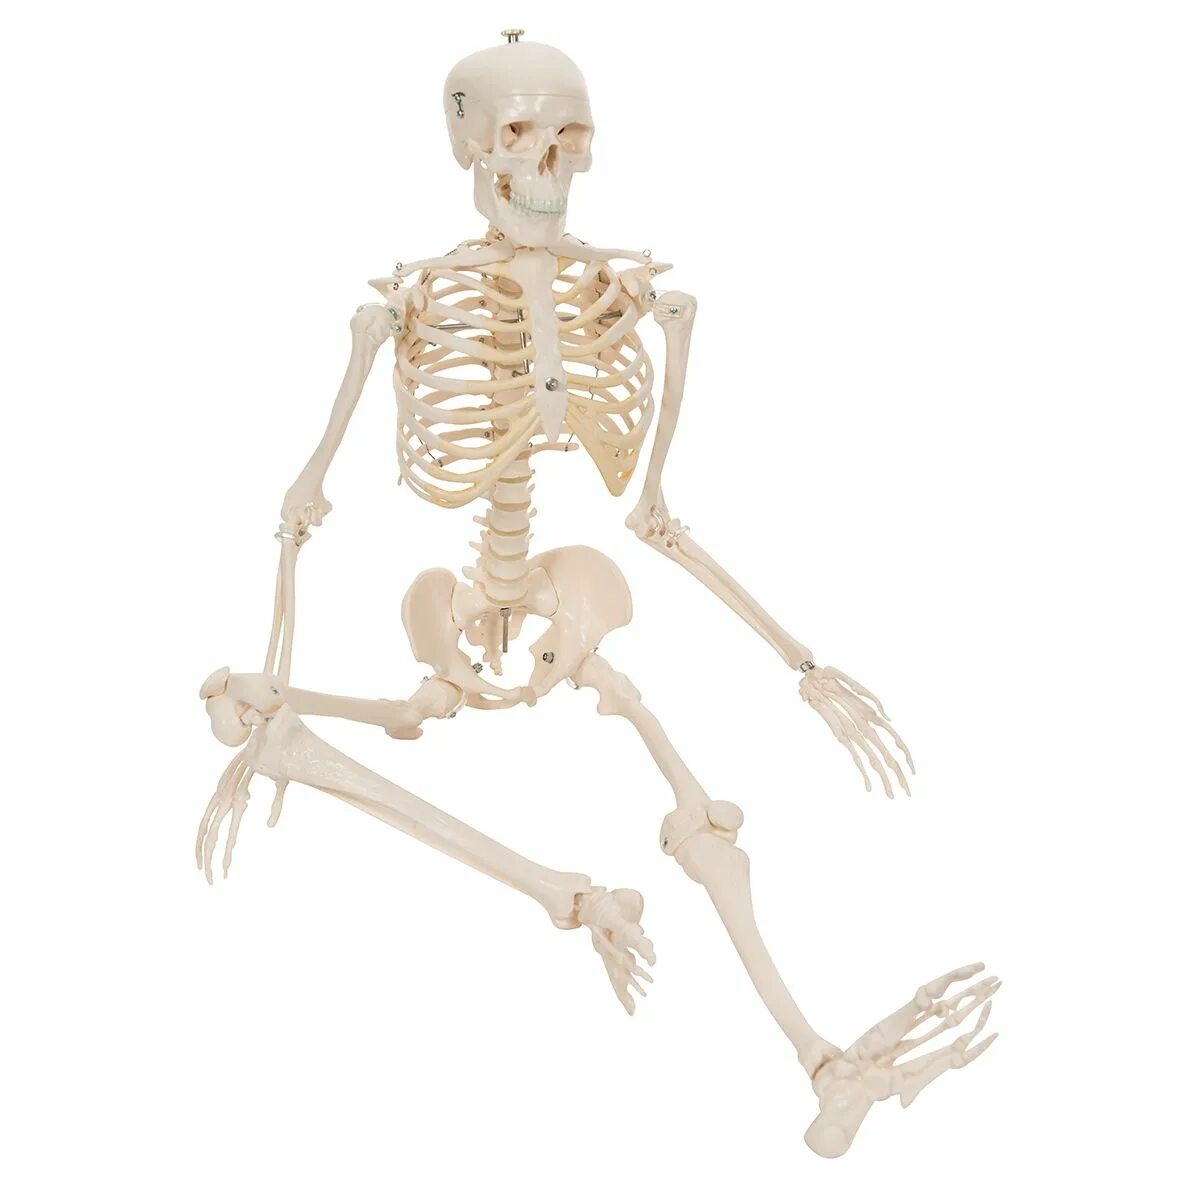 Мини макет скелета. Скелет человека игрушка. Модель скелета человека. Скелет на подставке. Skillful 3